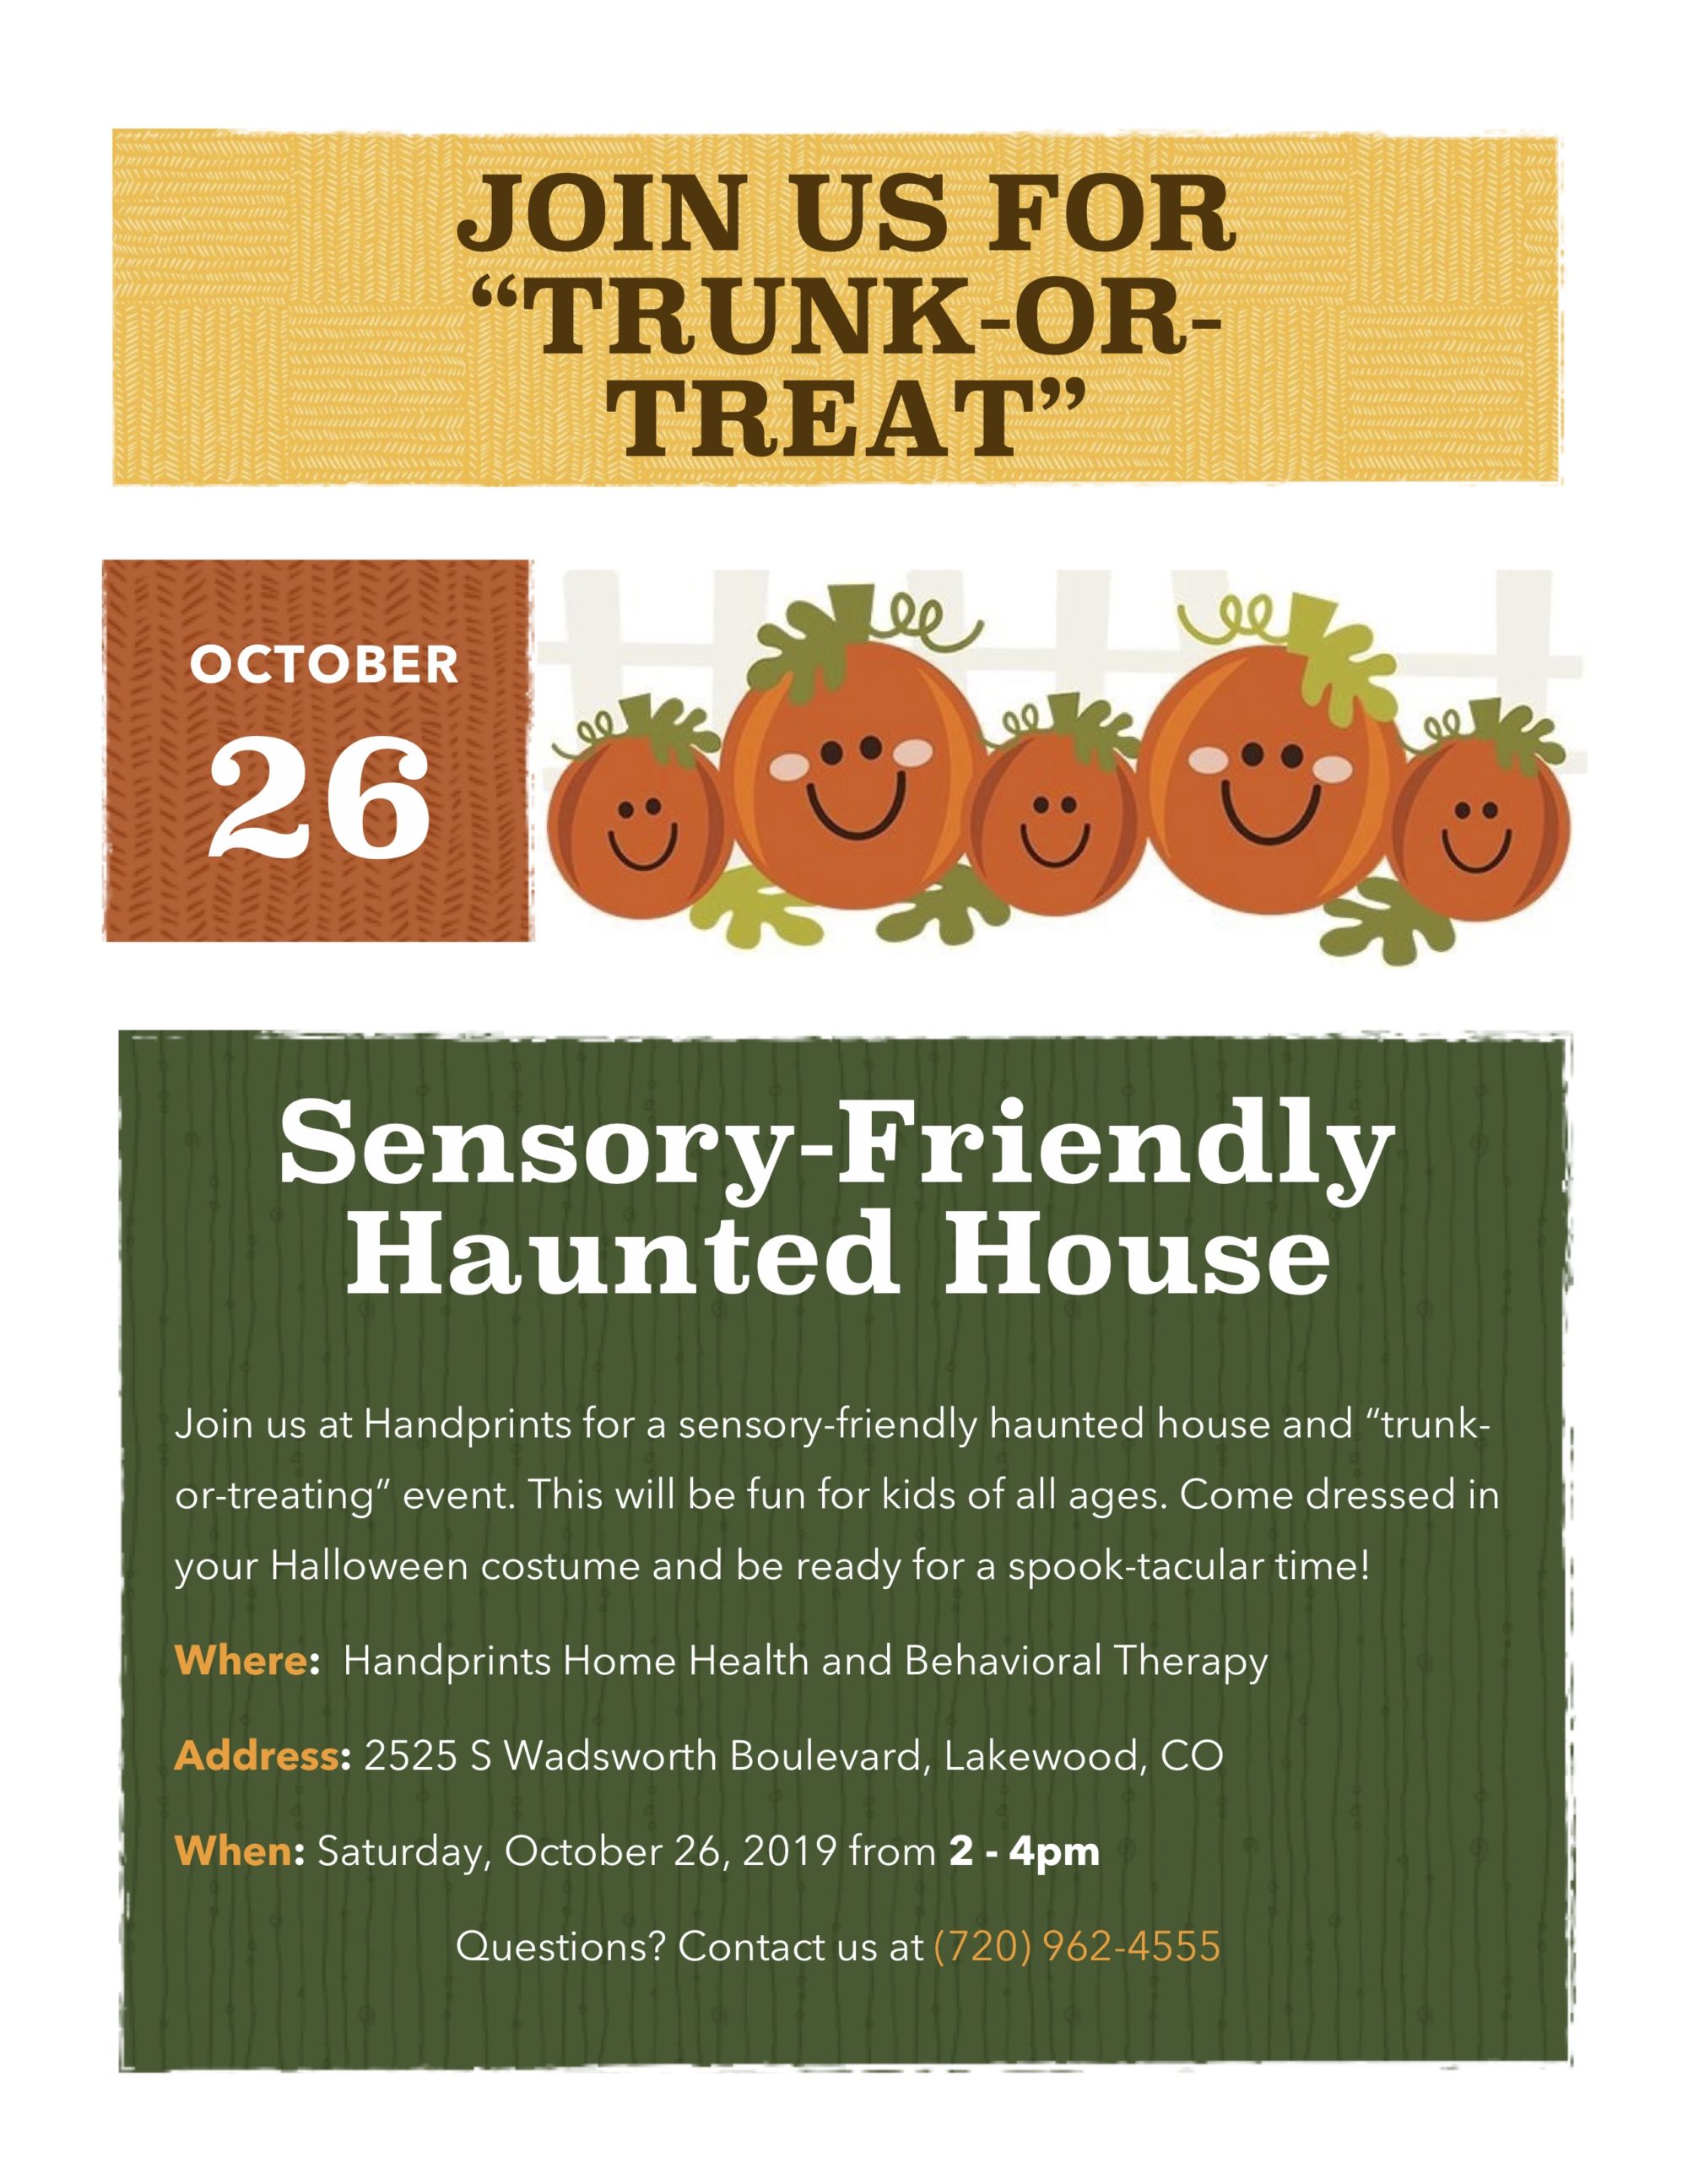 Sensory-Friendly Haunted House - PASCO Community Events